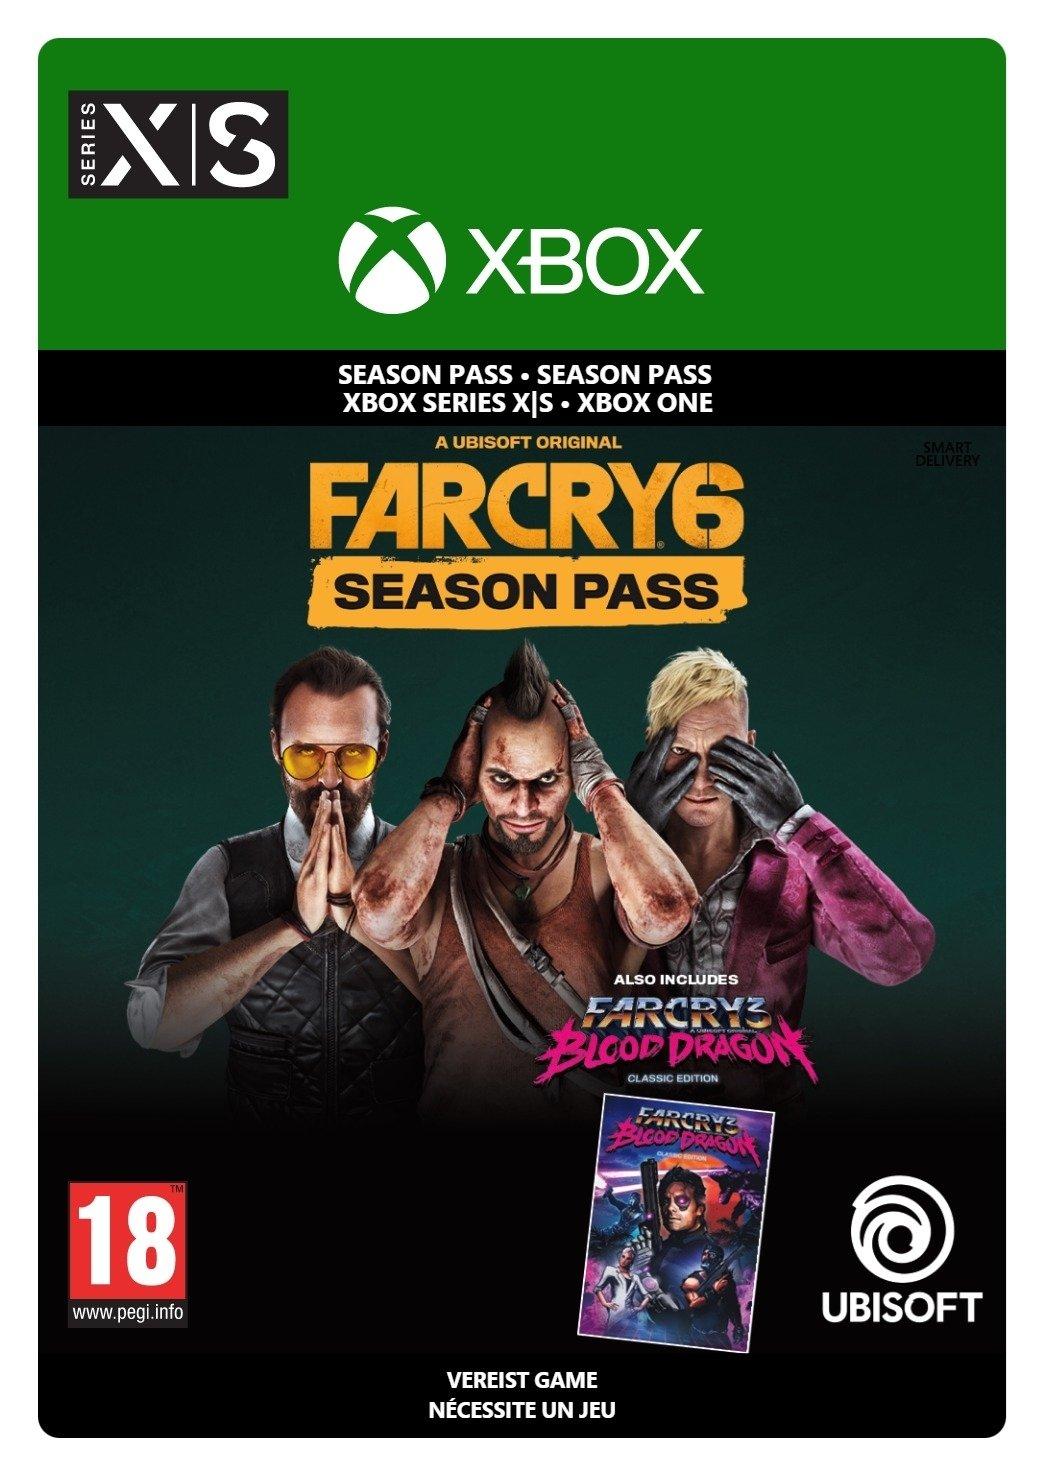 Far Cry 6 Season Pass - Xbox Series X/Xbox One - Season Pass | 7D4-00590 (5bfc8d22-4f7d-4e4e-87aa-f2c0b5c81f04)